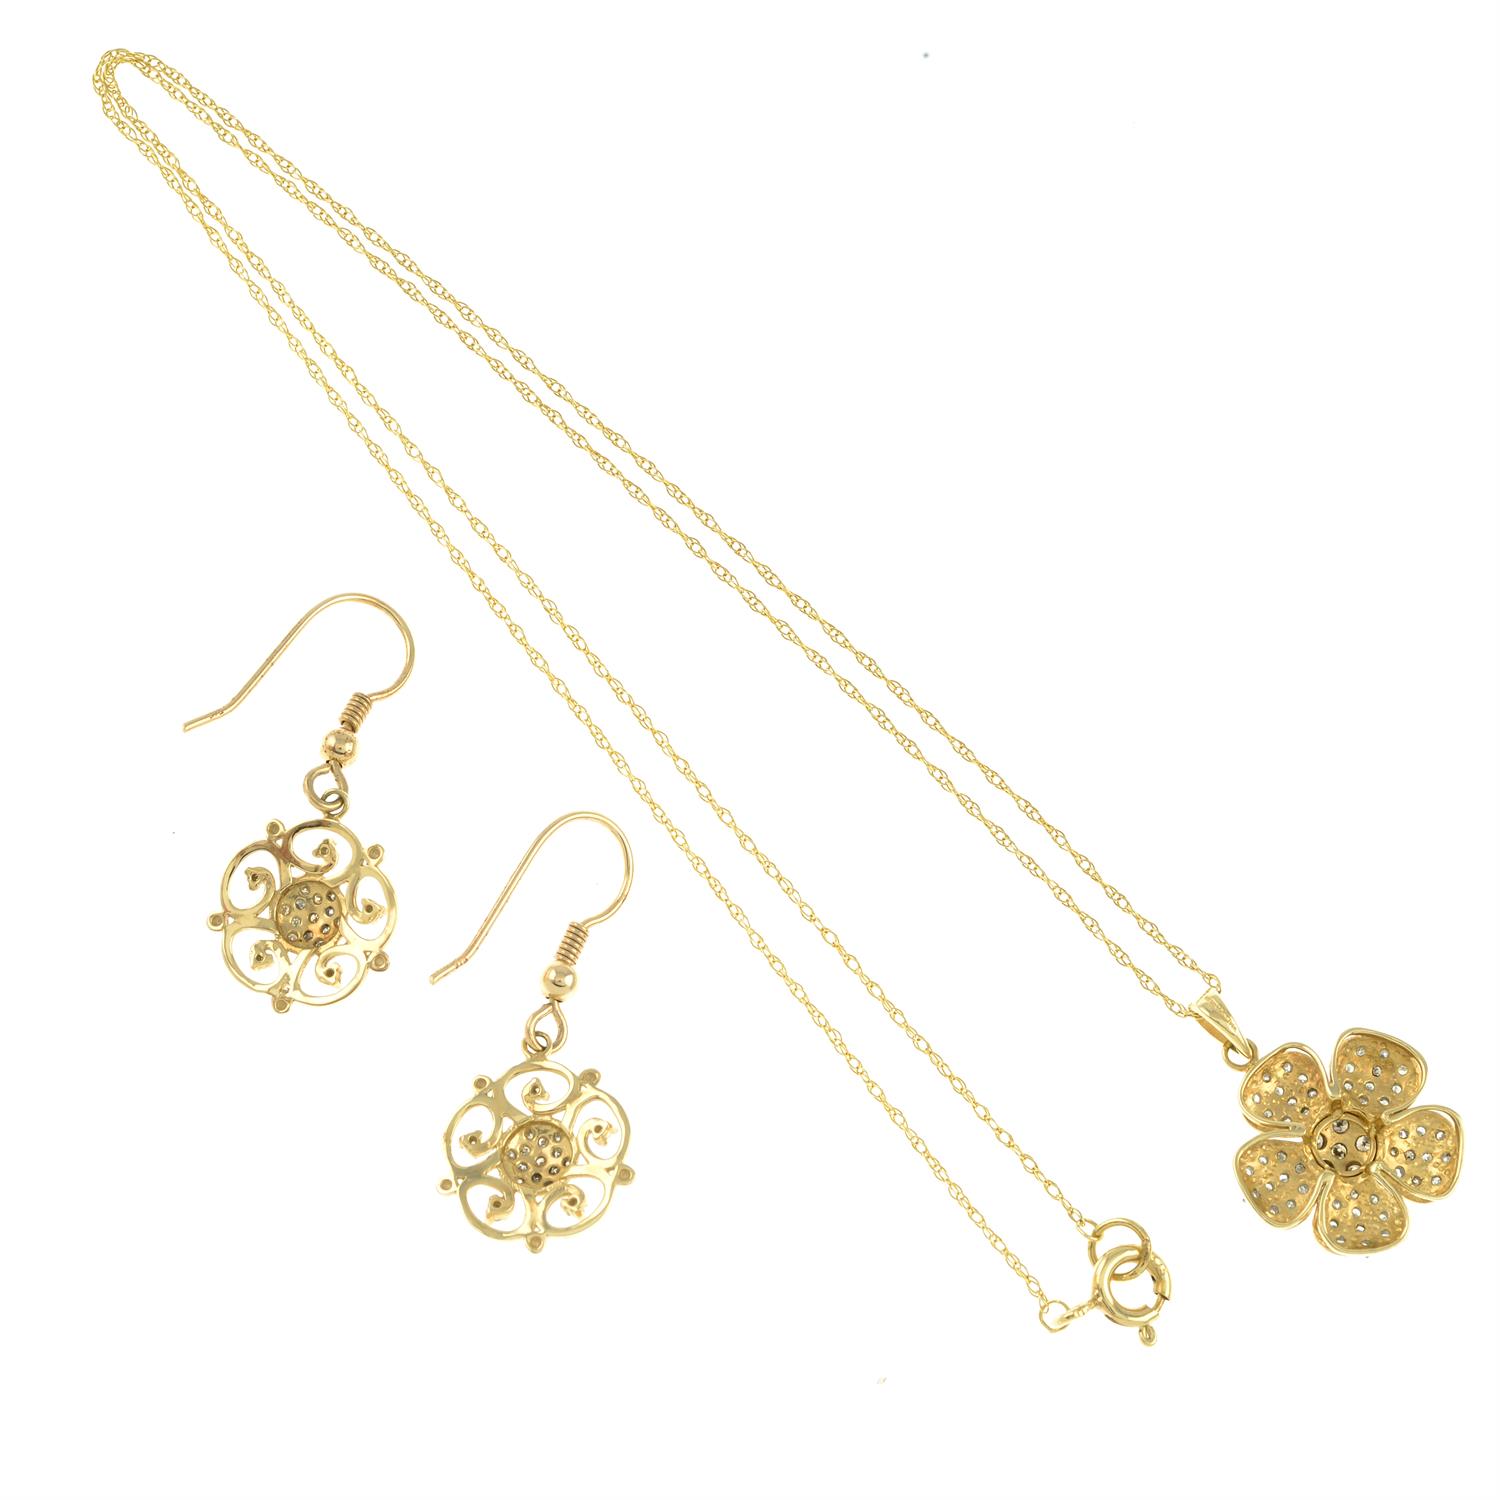 Diamond necklace & earrings - Image 2 of 2